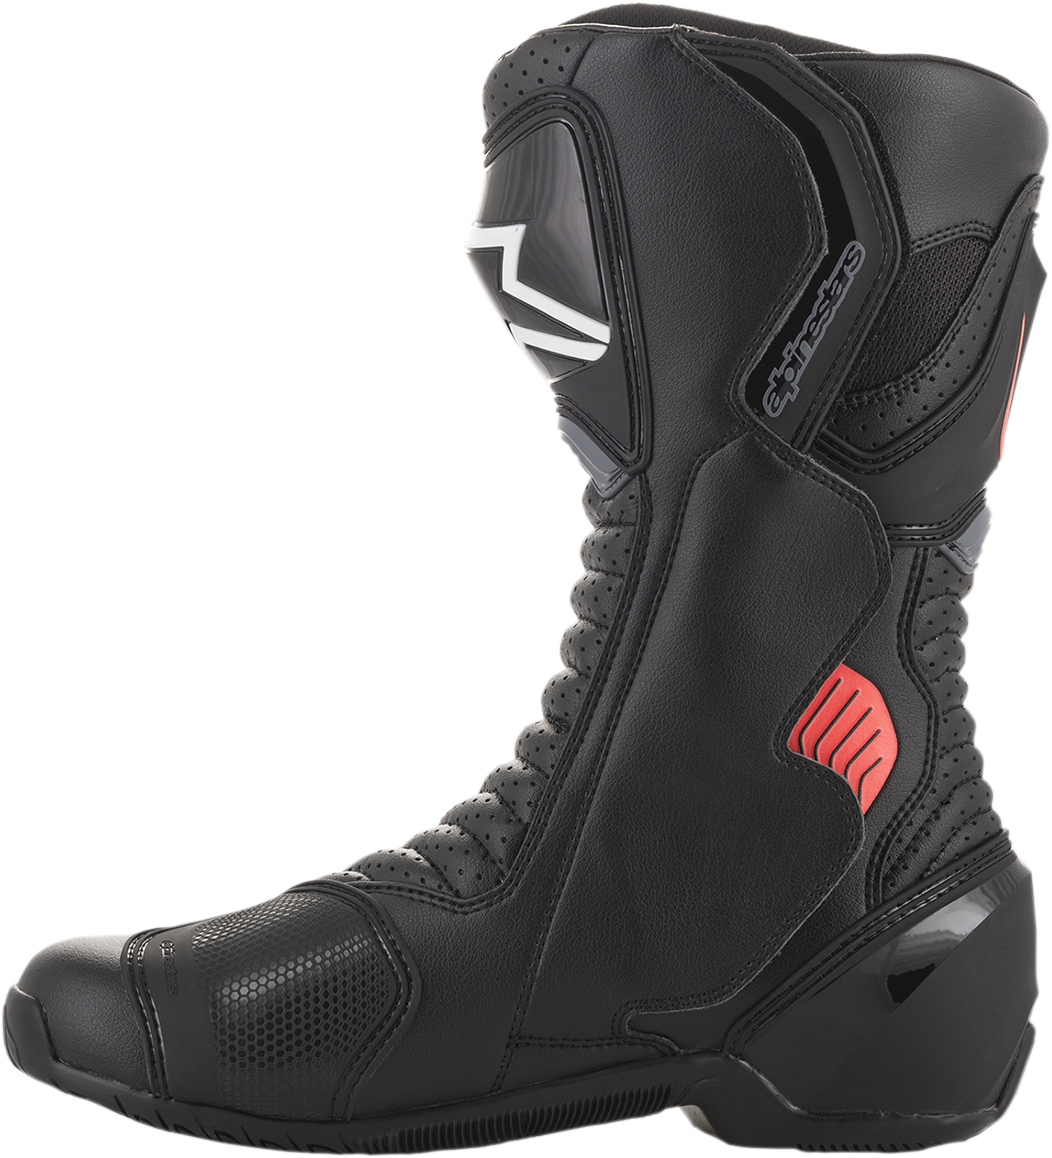 ALPINESTARS SMX-6 v2 Vented Boots - Black/Gray/Red - US 12 / EU 47 2223017-1133-47